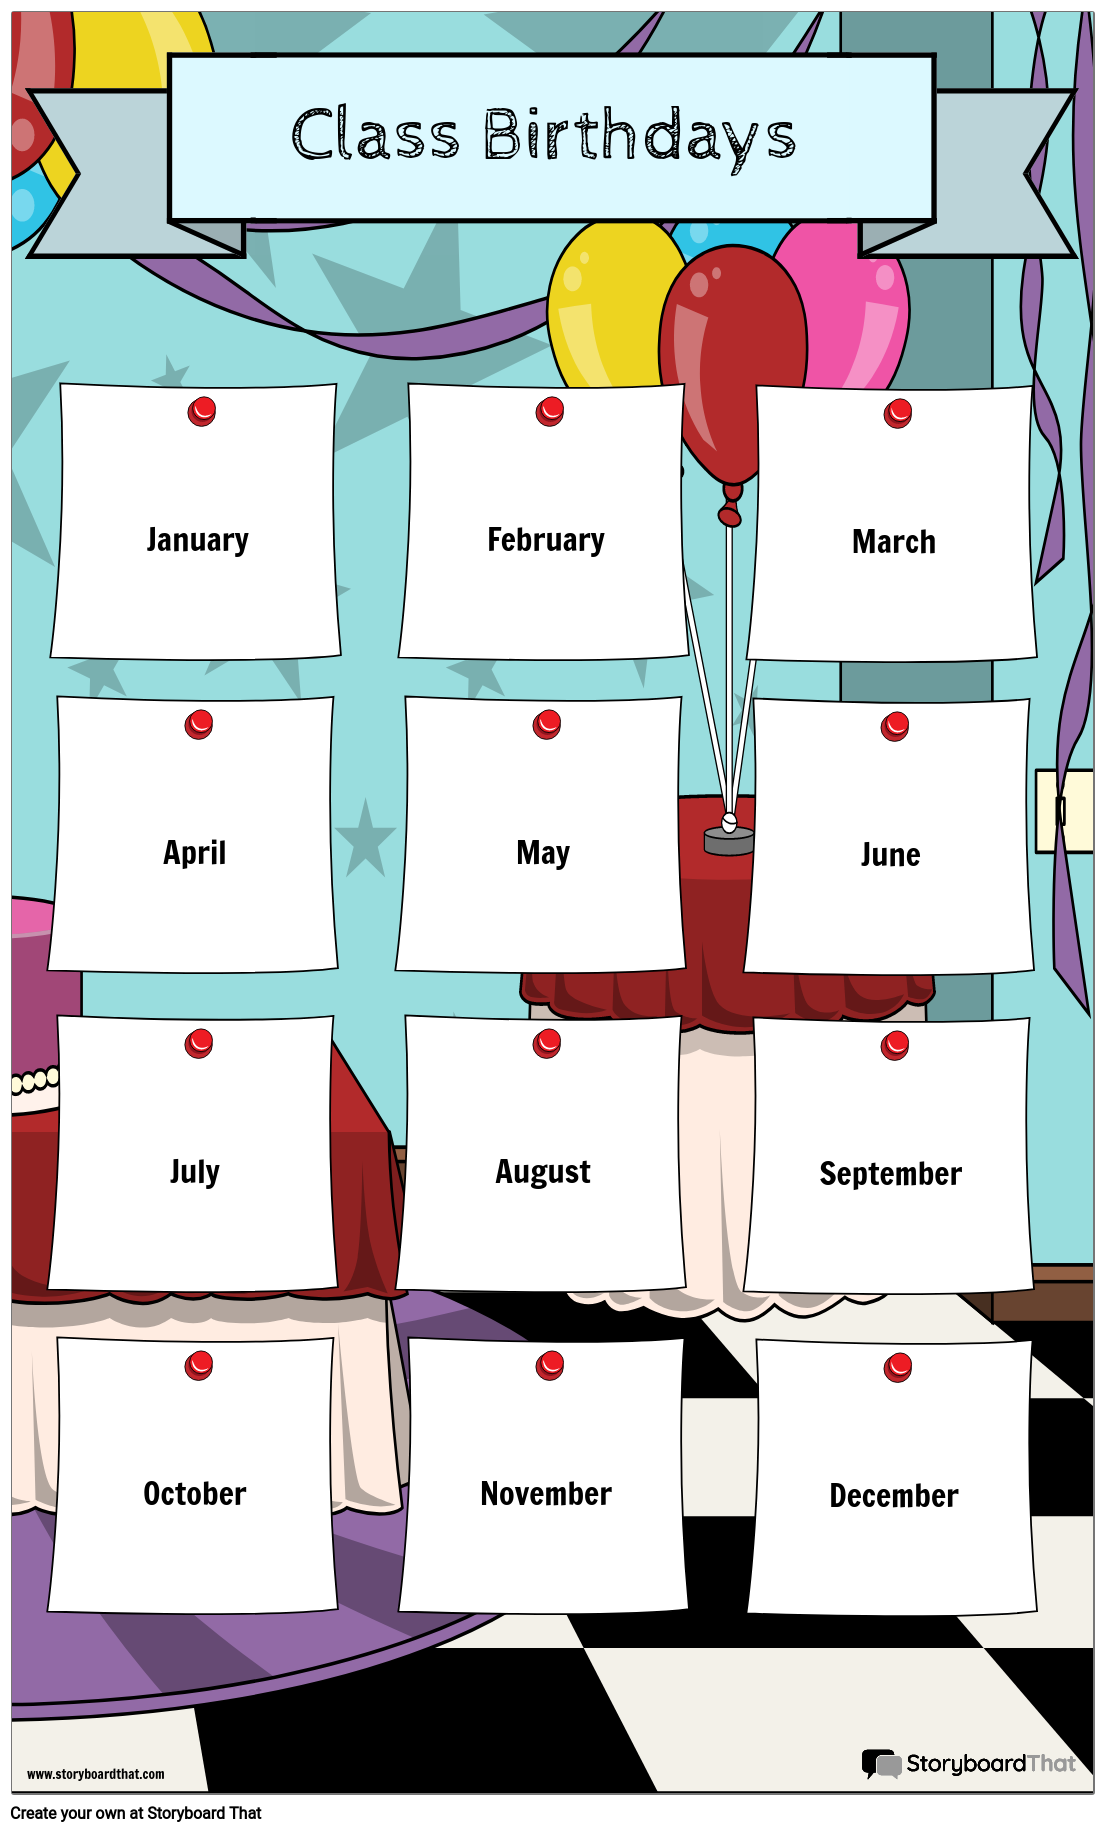 classroom-birthday-calendar-storyboard-by-poster-templates